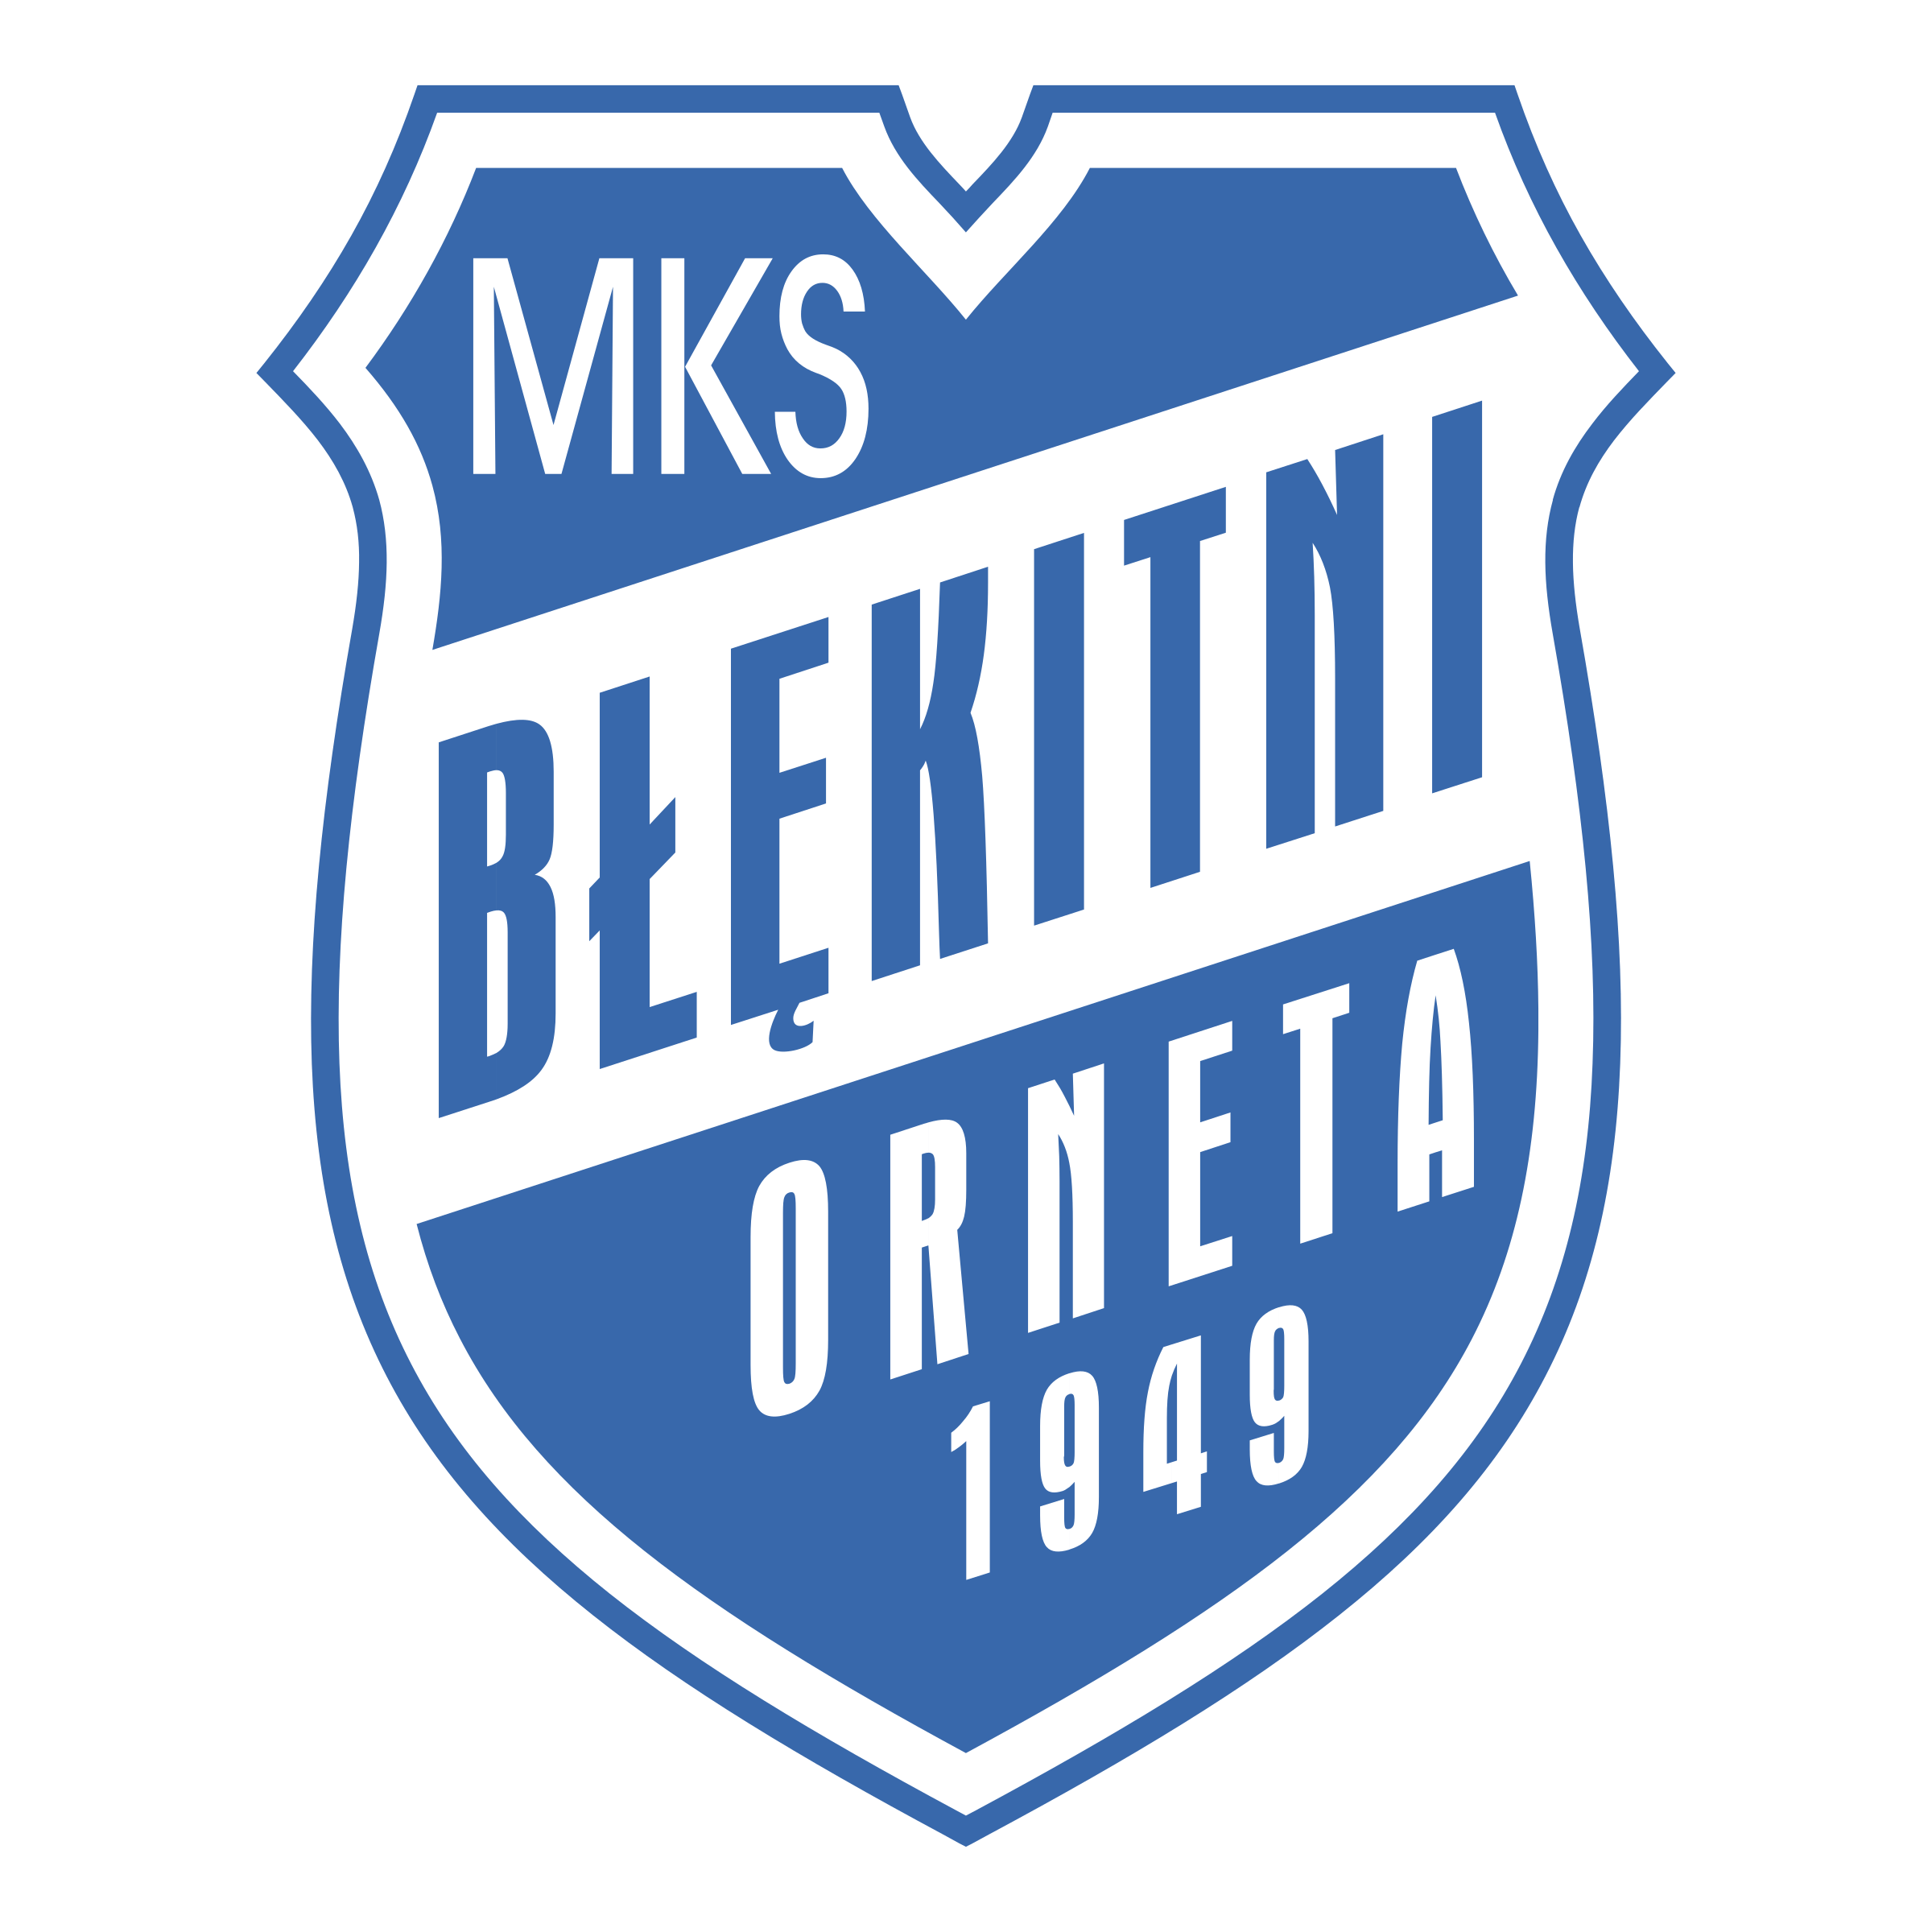 MKS Logo - MKS Blekitni Orneta Logo PNG Transparent & SVG Vector - Freebie Supply